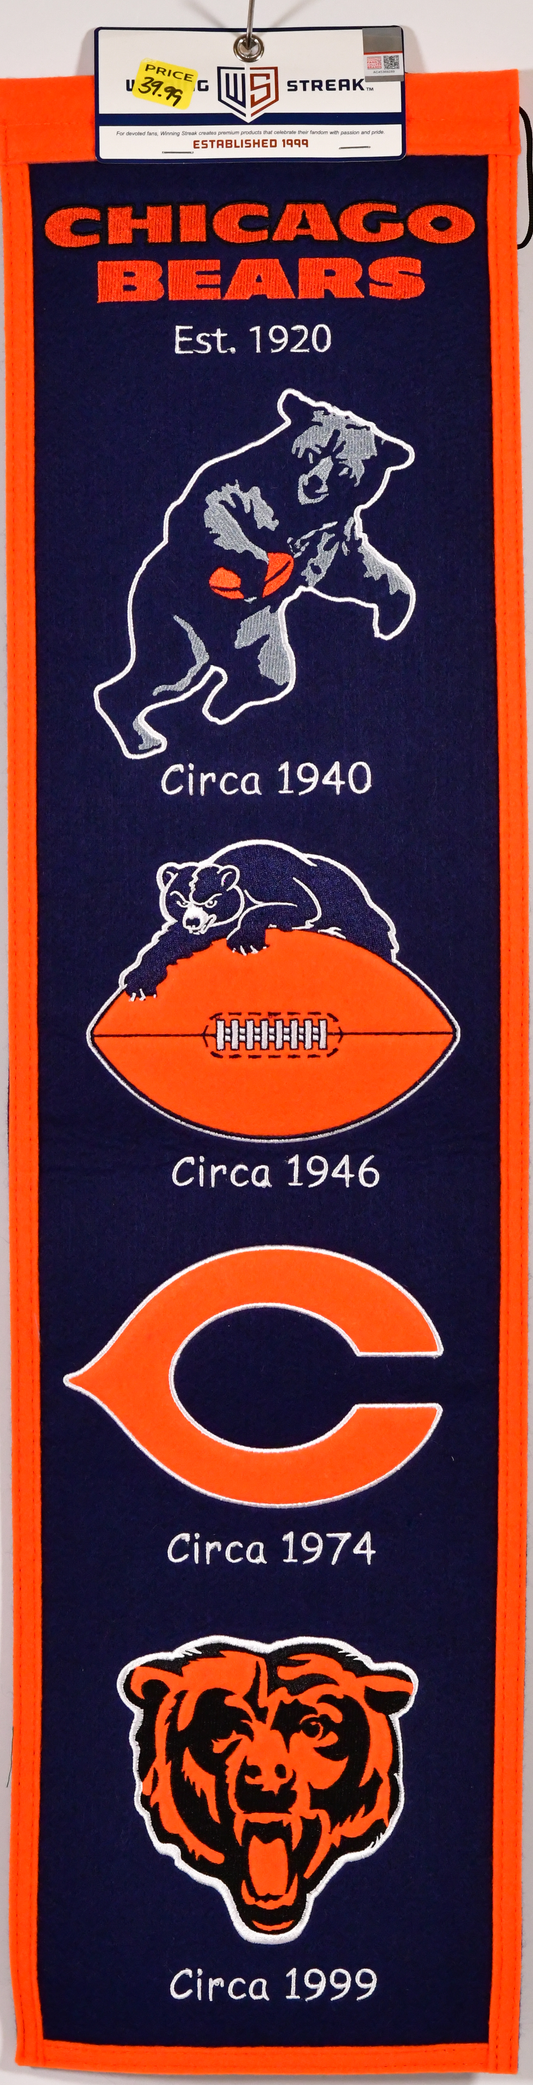 Chicago Bears Heritage Banner